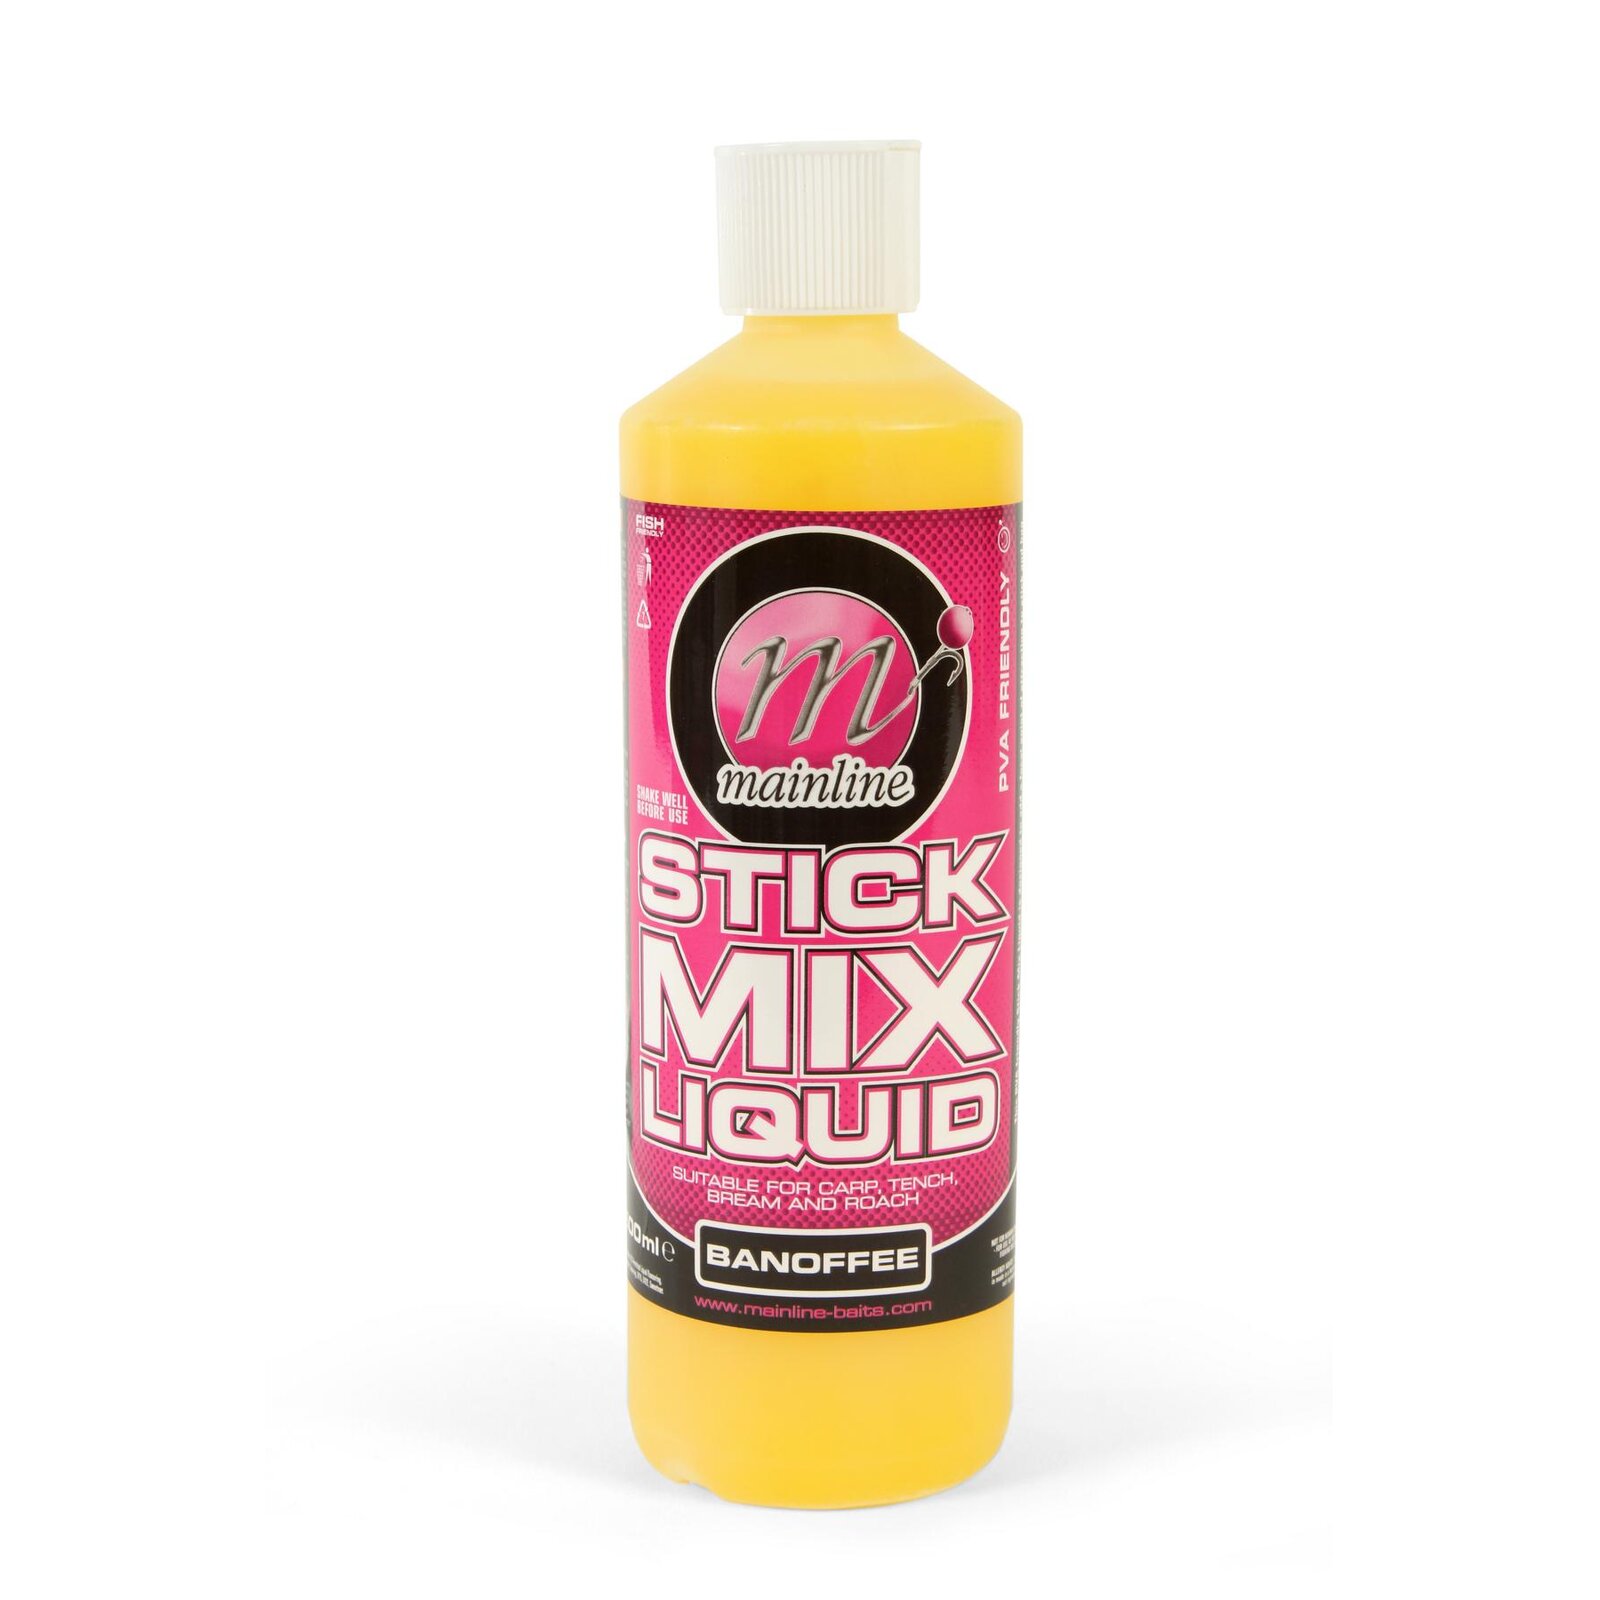 Mainline Stick Mix Liquid - Banoffee - 500 ml Bottle